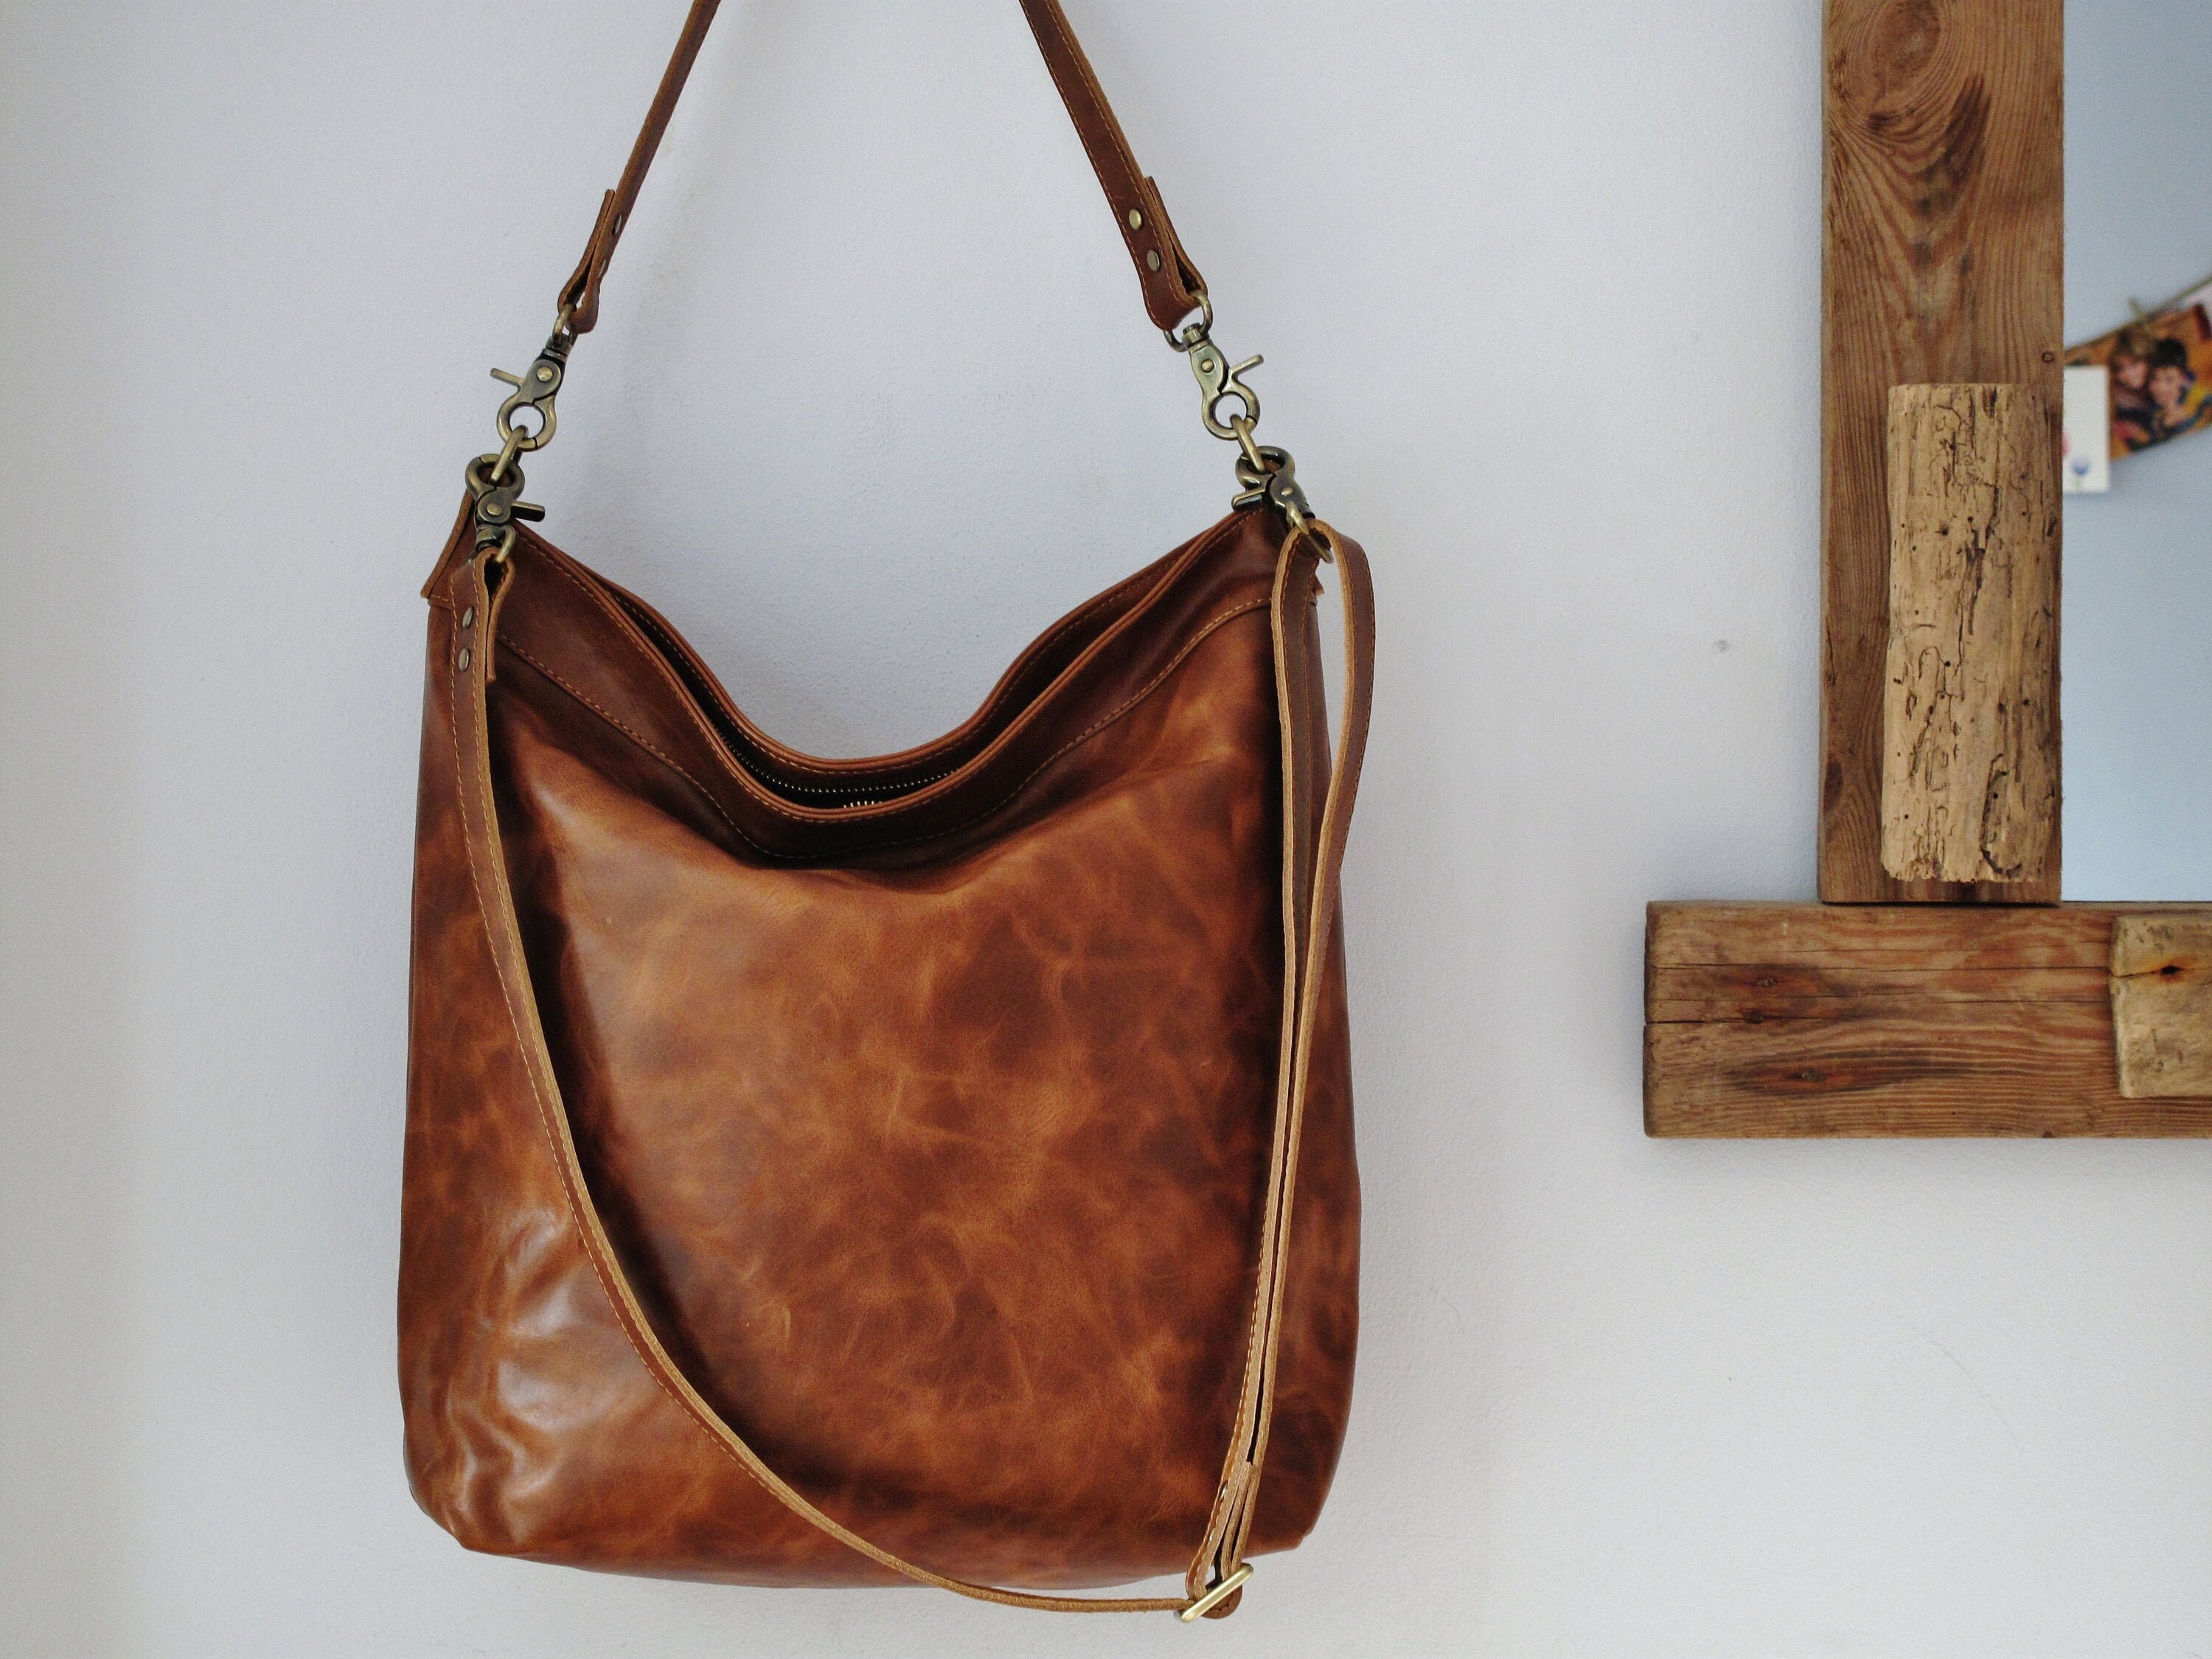 Soye Women Handbags Hobo Bags Shoulder Tote Large Capacity PU Leather Handbags (Tan)